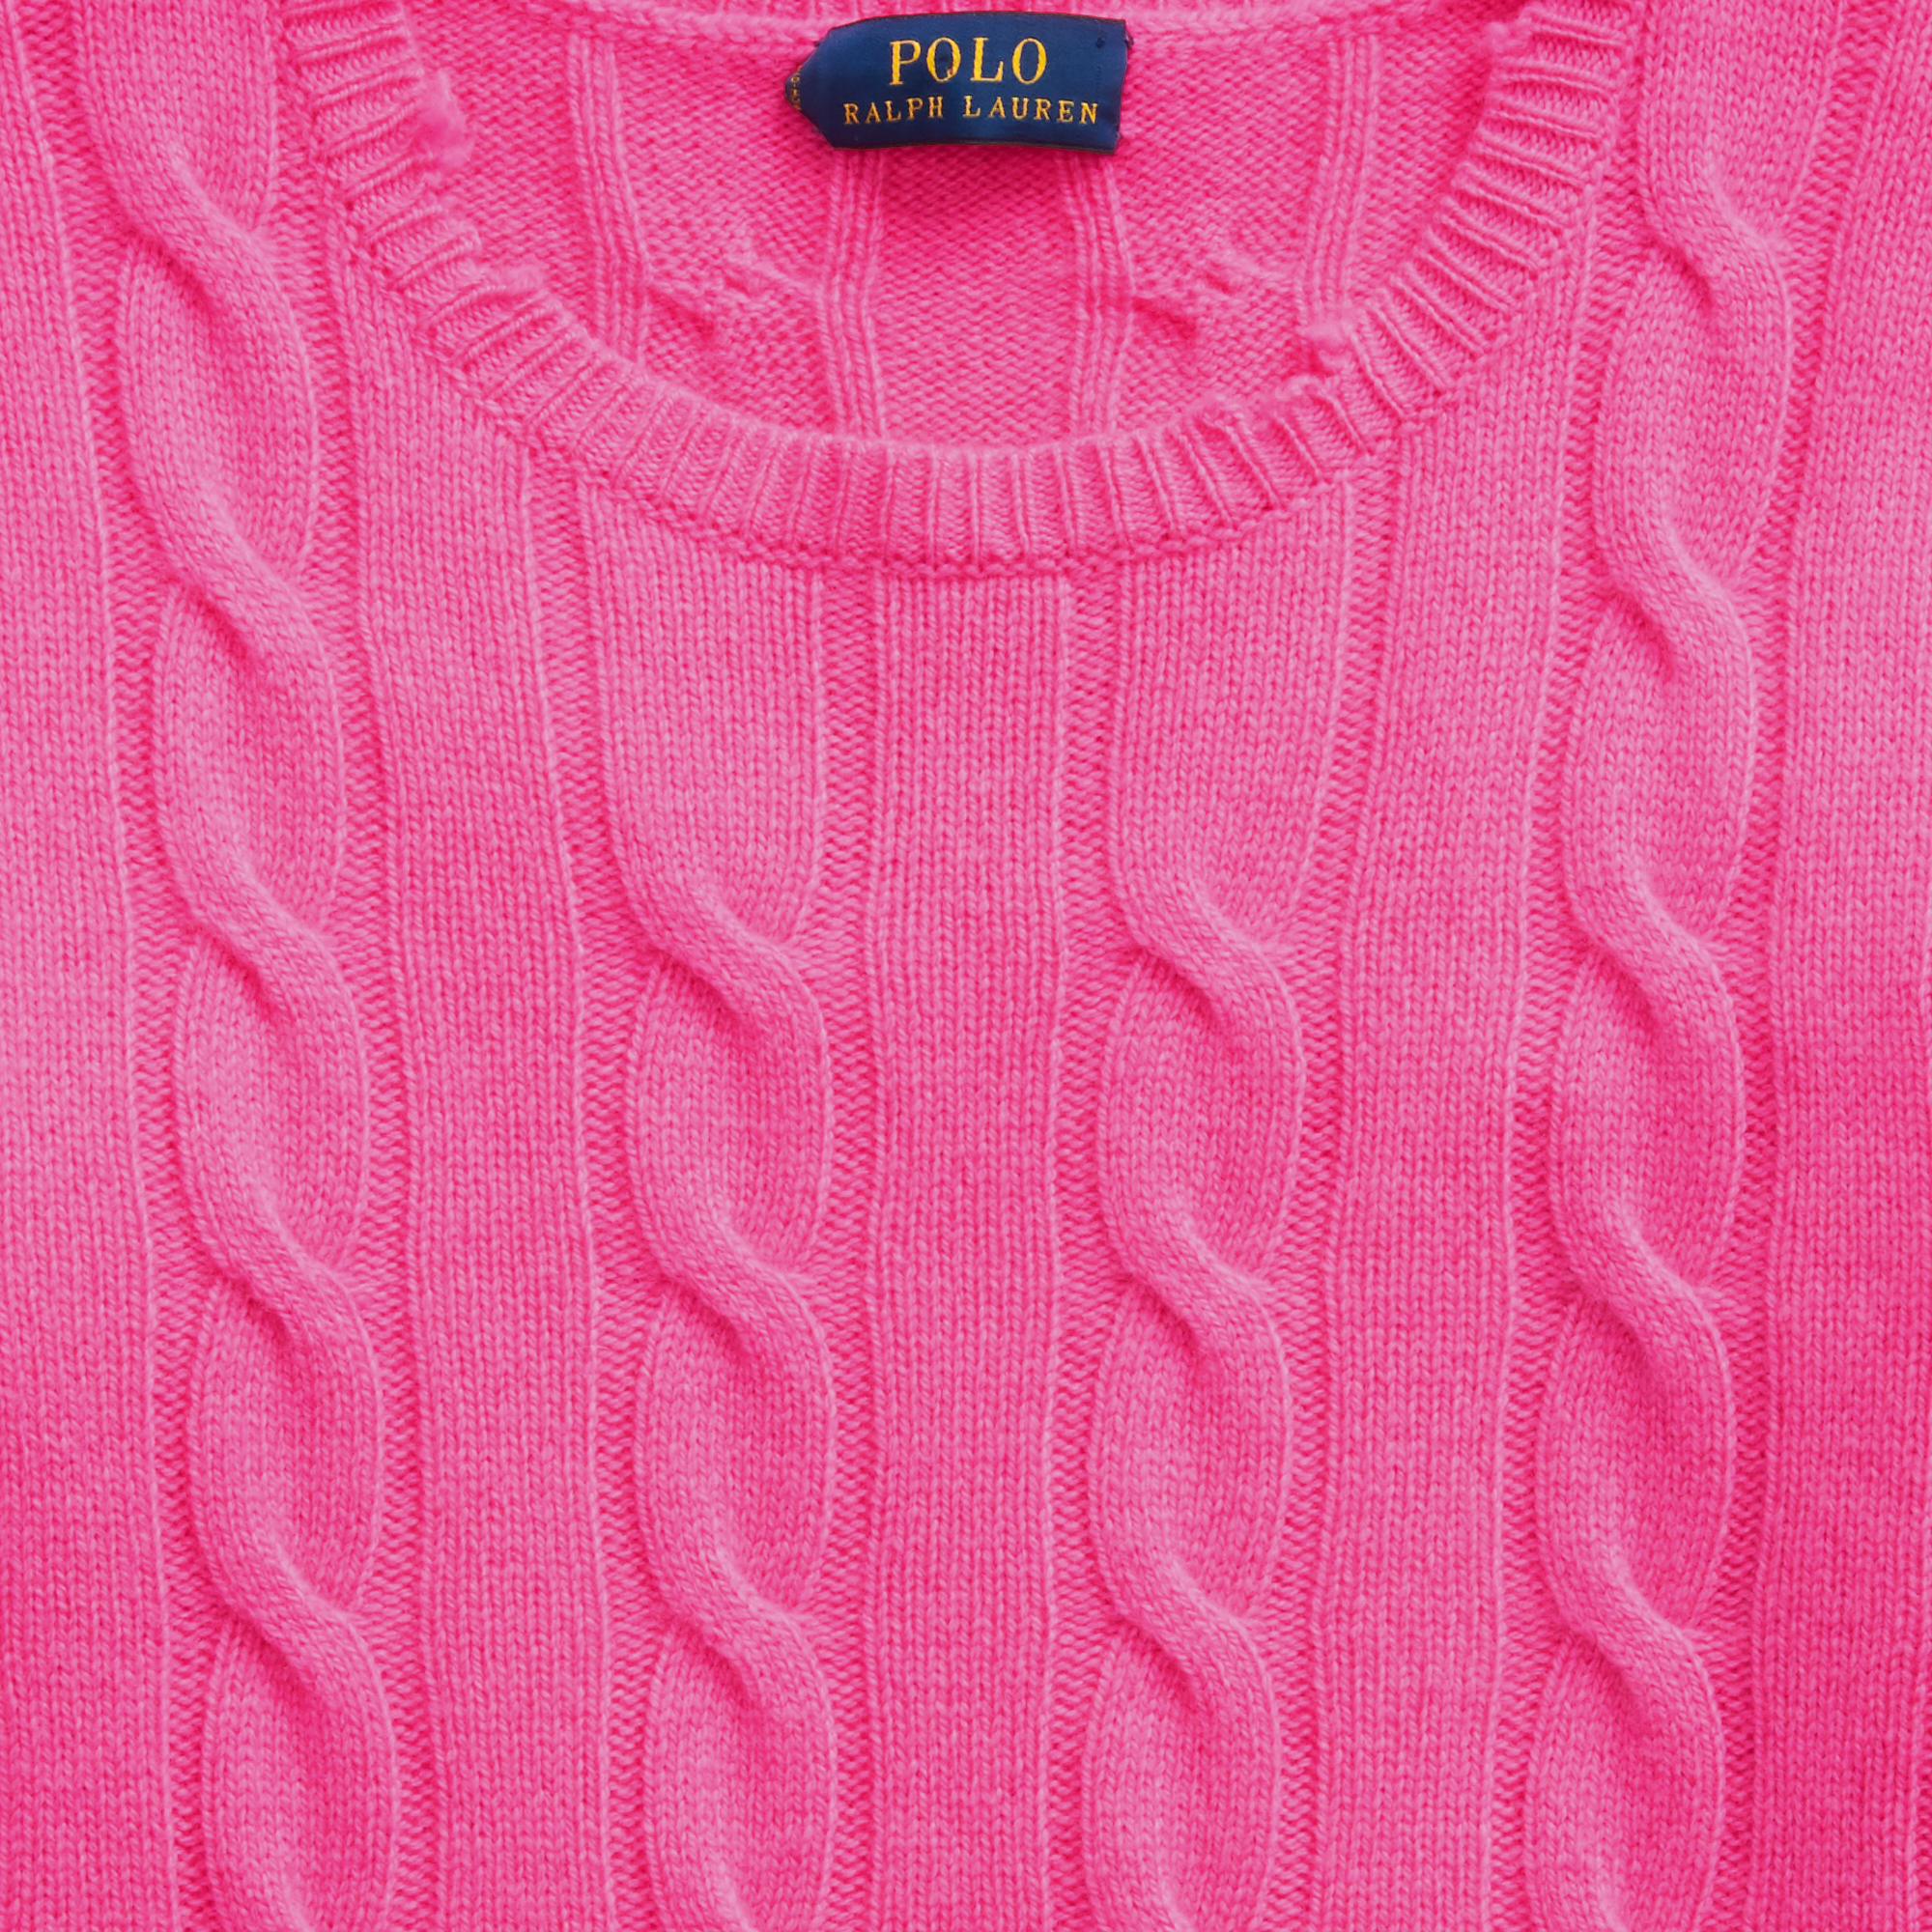 Ralph Lauren Distressed Cashmere Sweater. 8